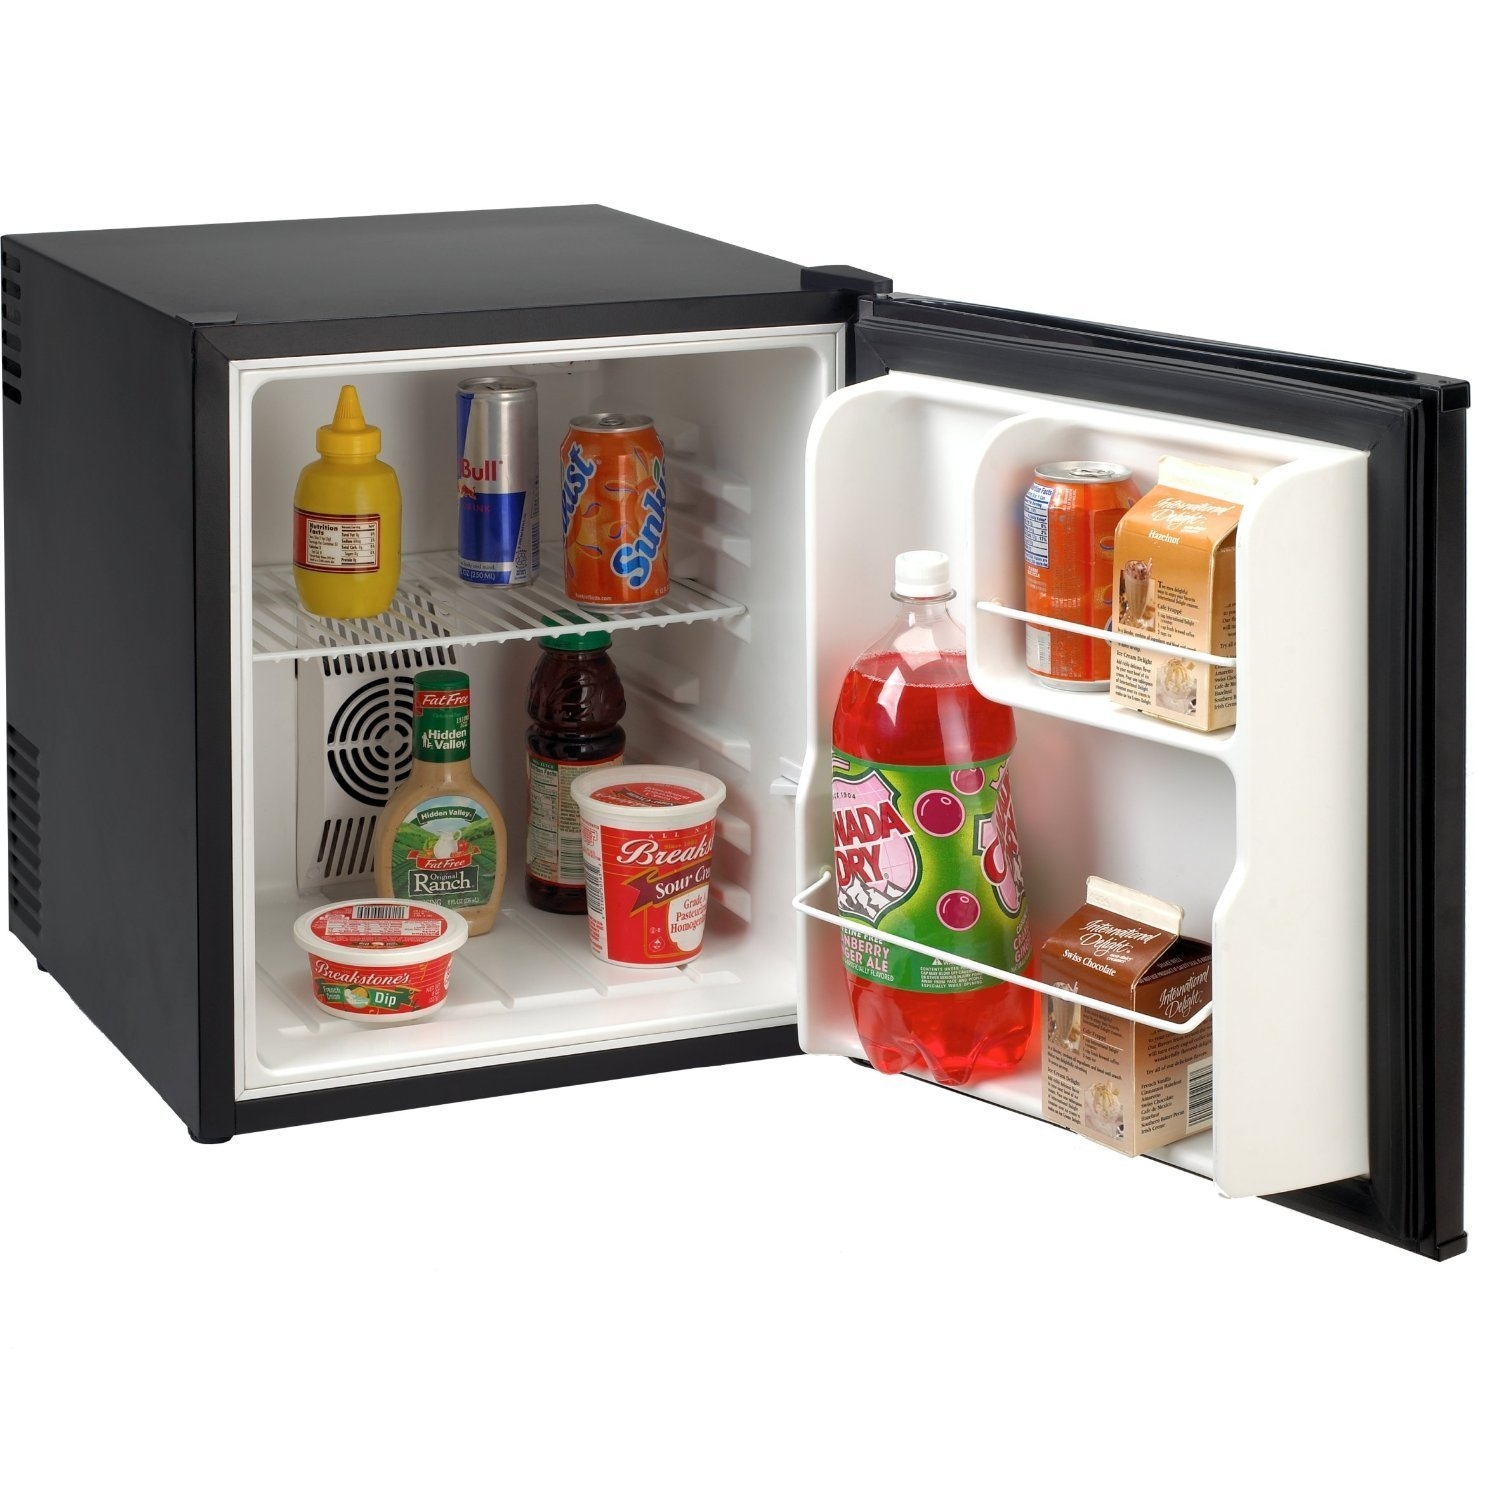 1.7 cu. ft. Freestanding Compact Refrigerator